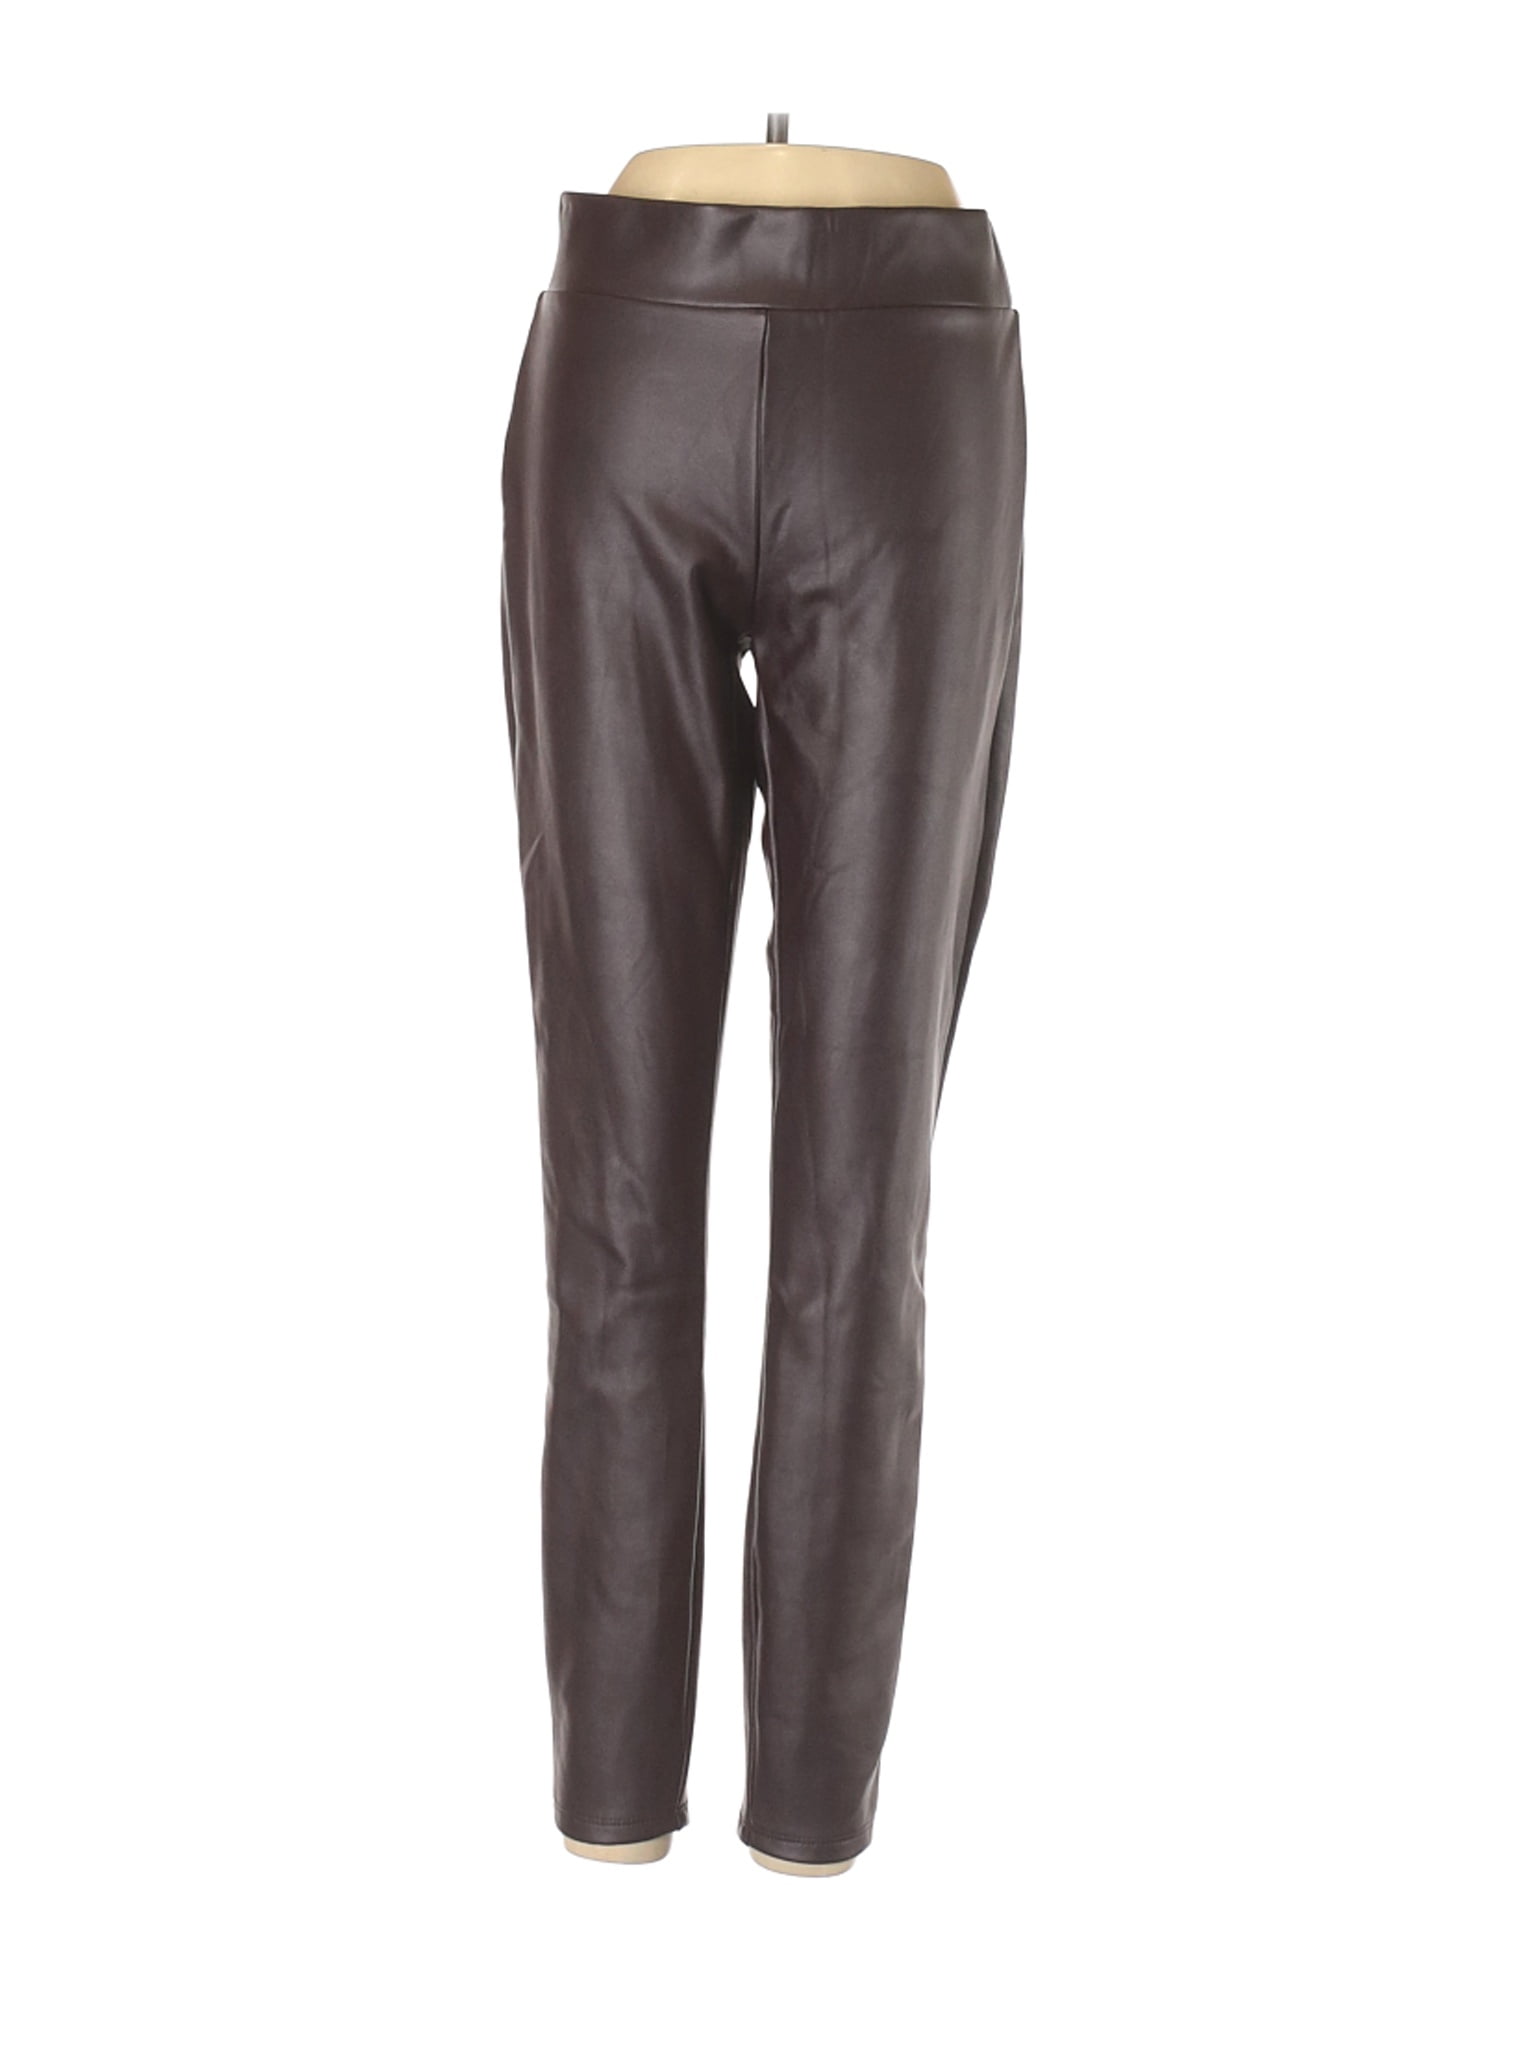 ann taylor faux leather pants